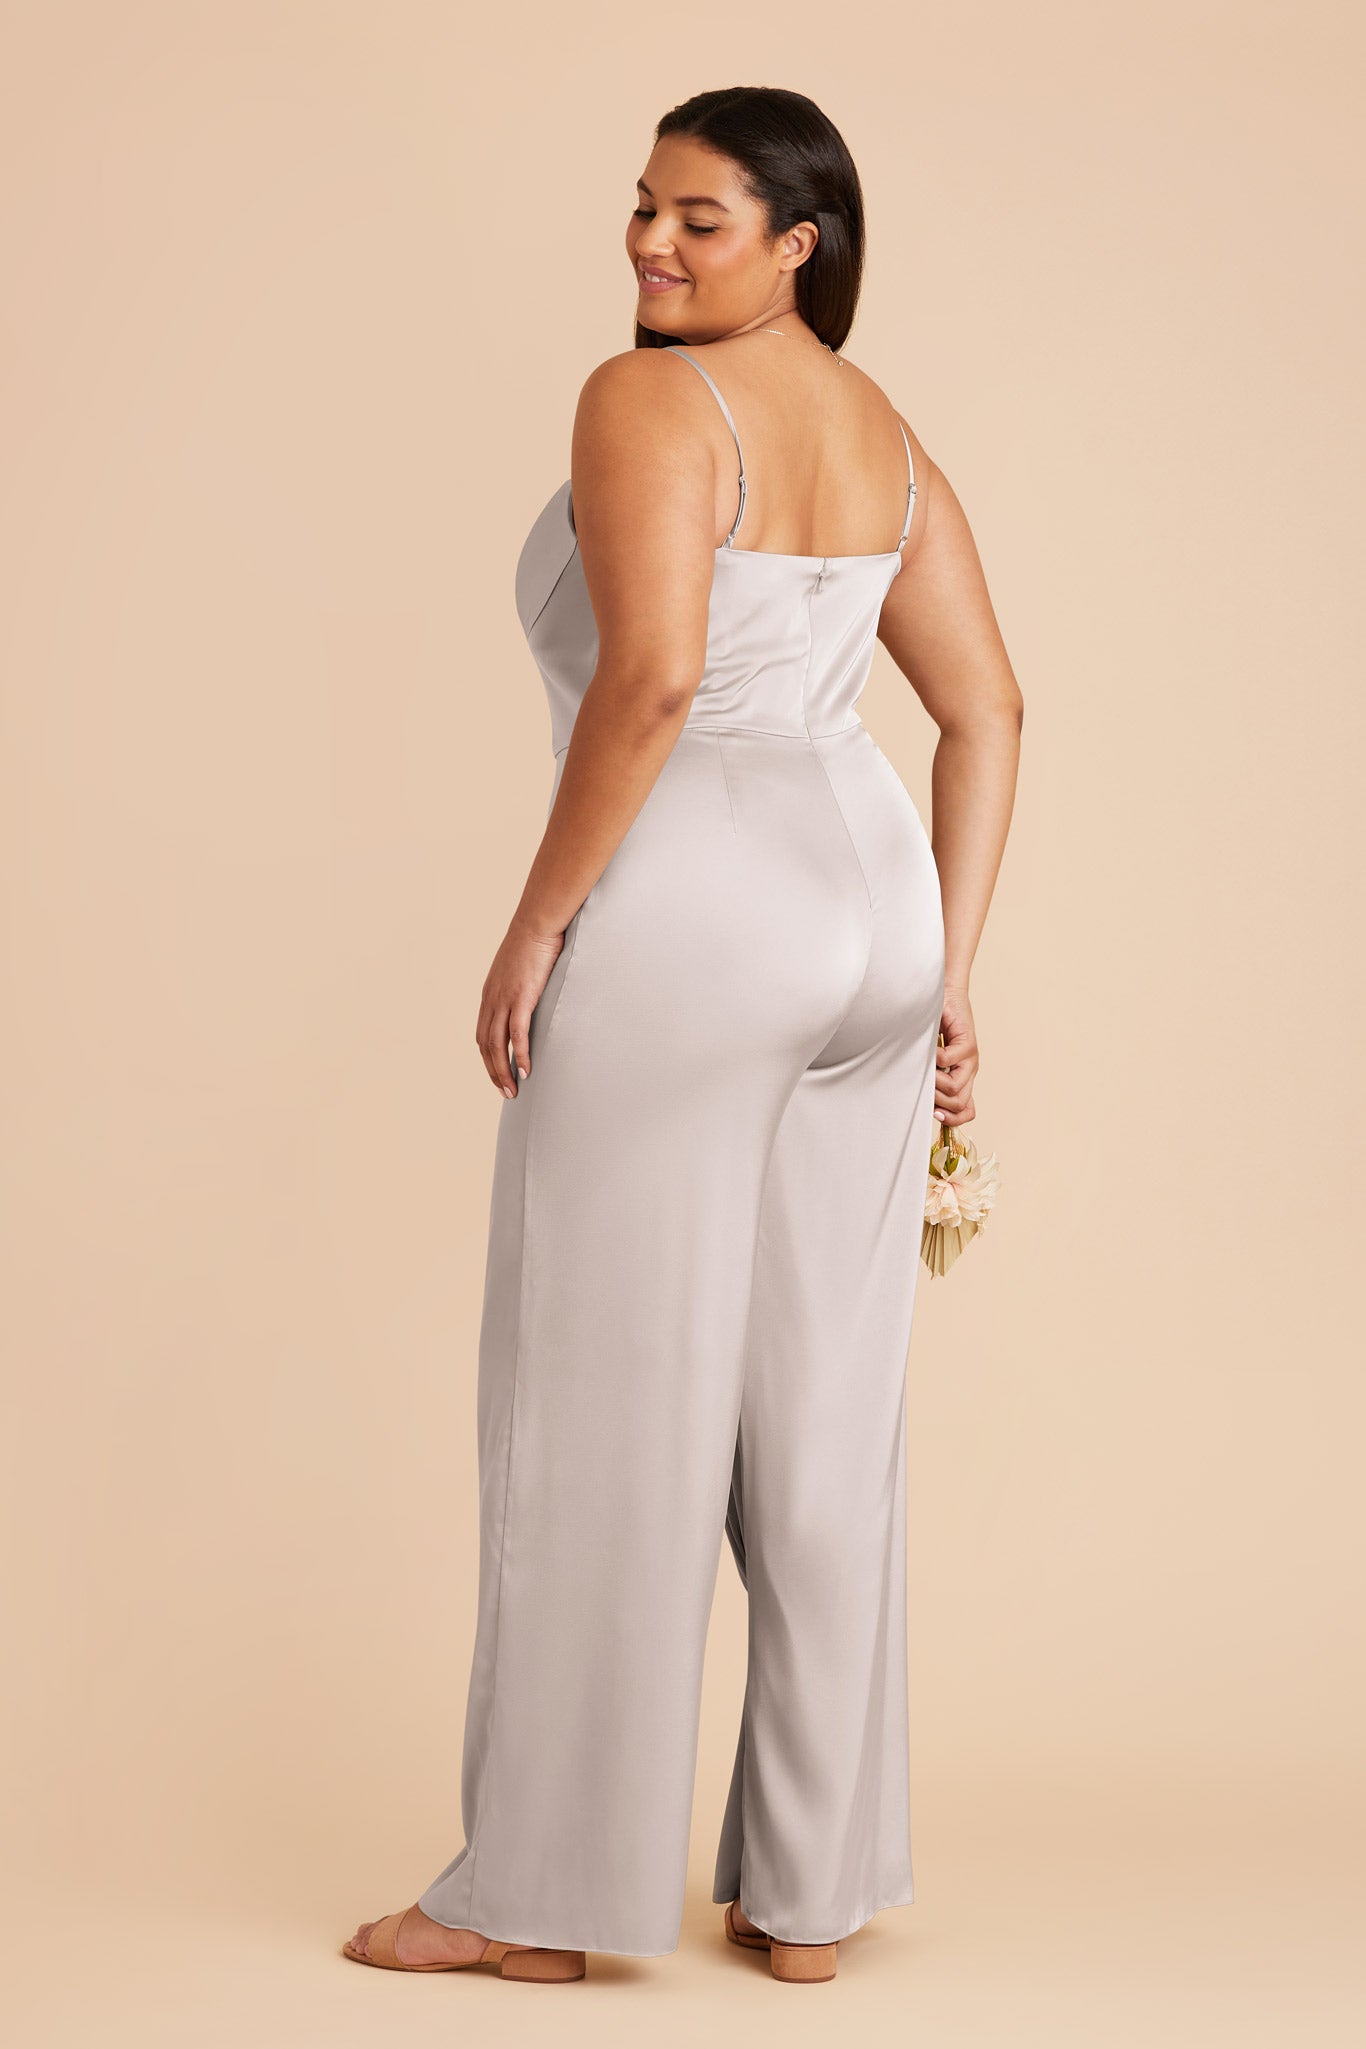 Platinum Donna Matte Satin Bridesmaid Jumpsuit by Birdy Grey